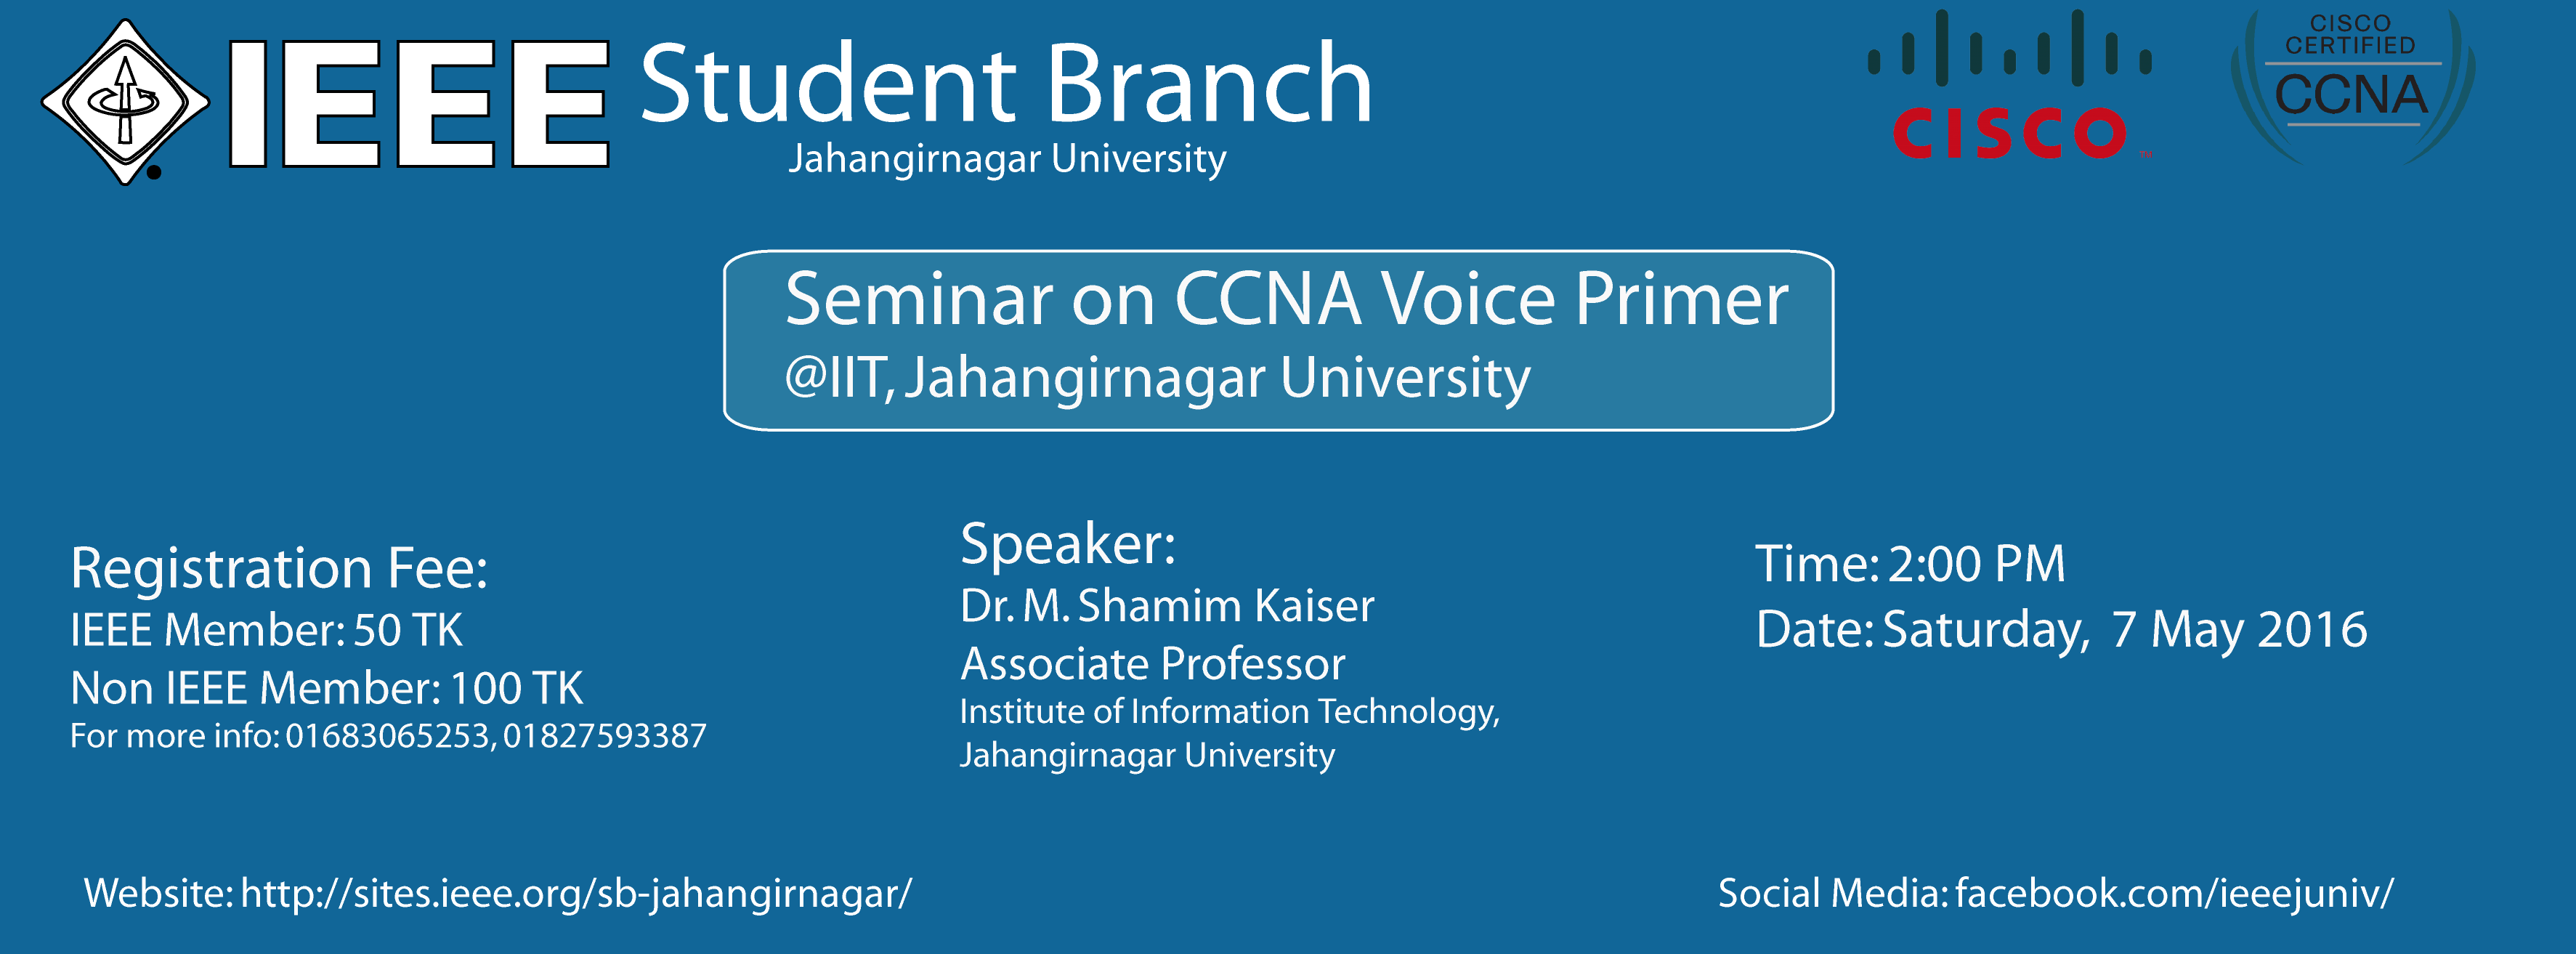 Seminar on CCNA voice primer